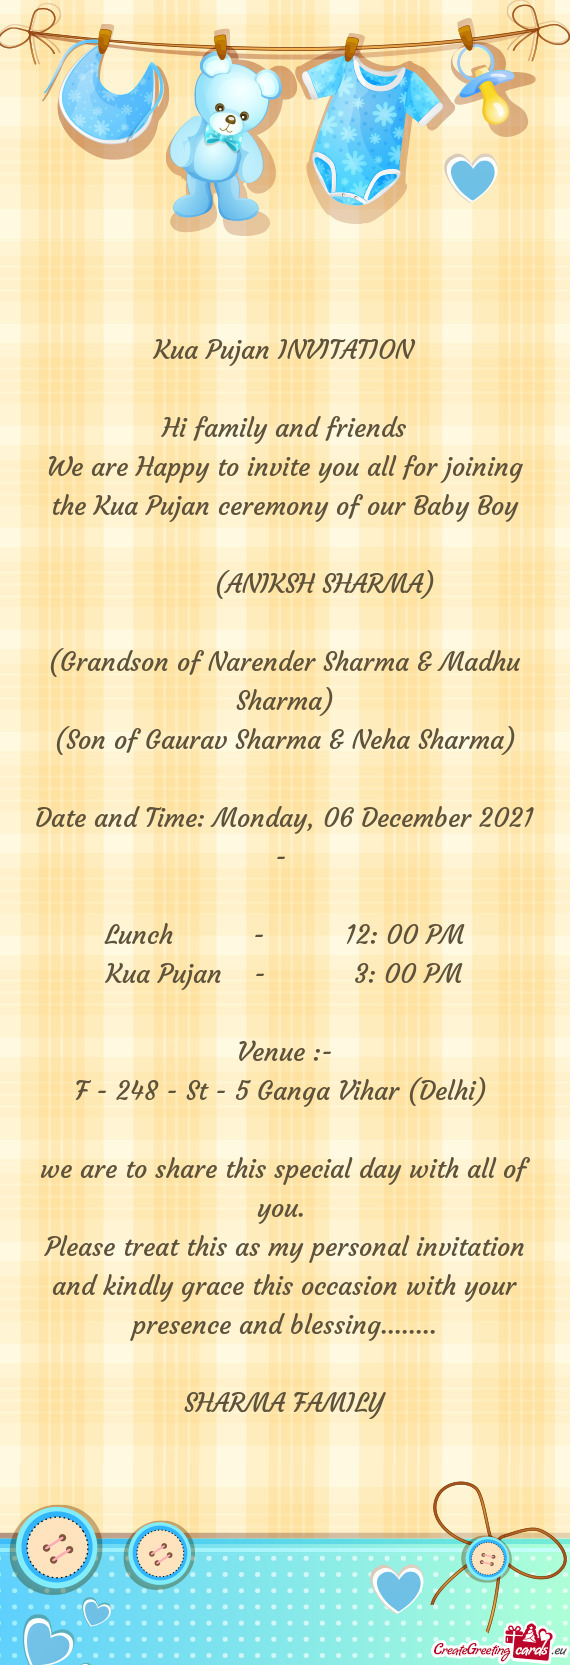 Sharma)
 (Son of Gaurav Sharma & Neha Sharma)
 
 Date and Time